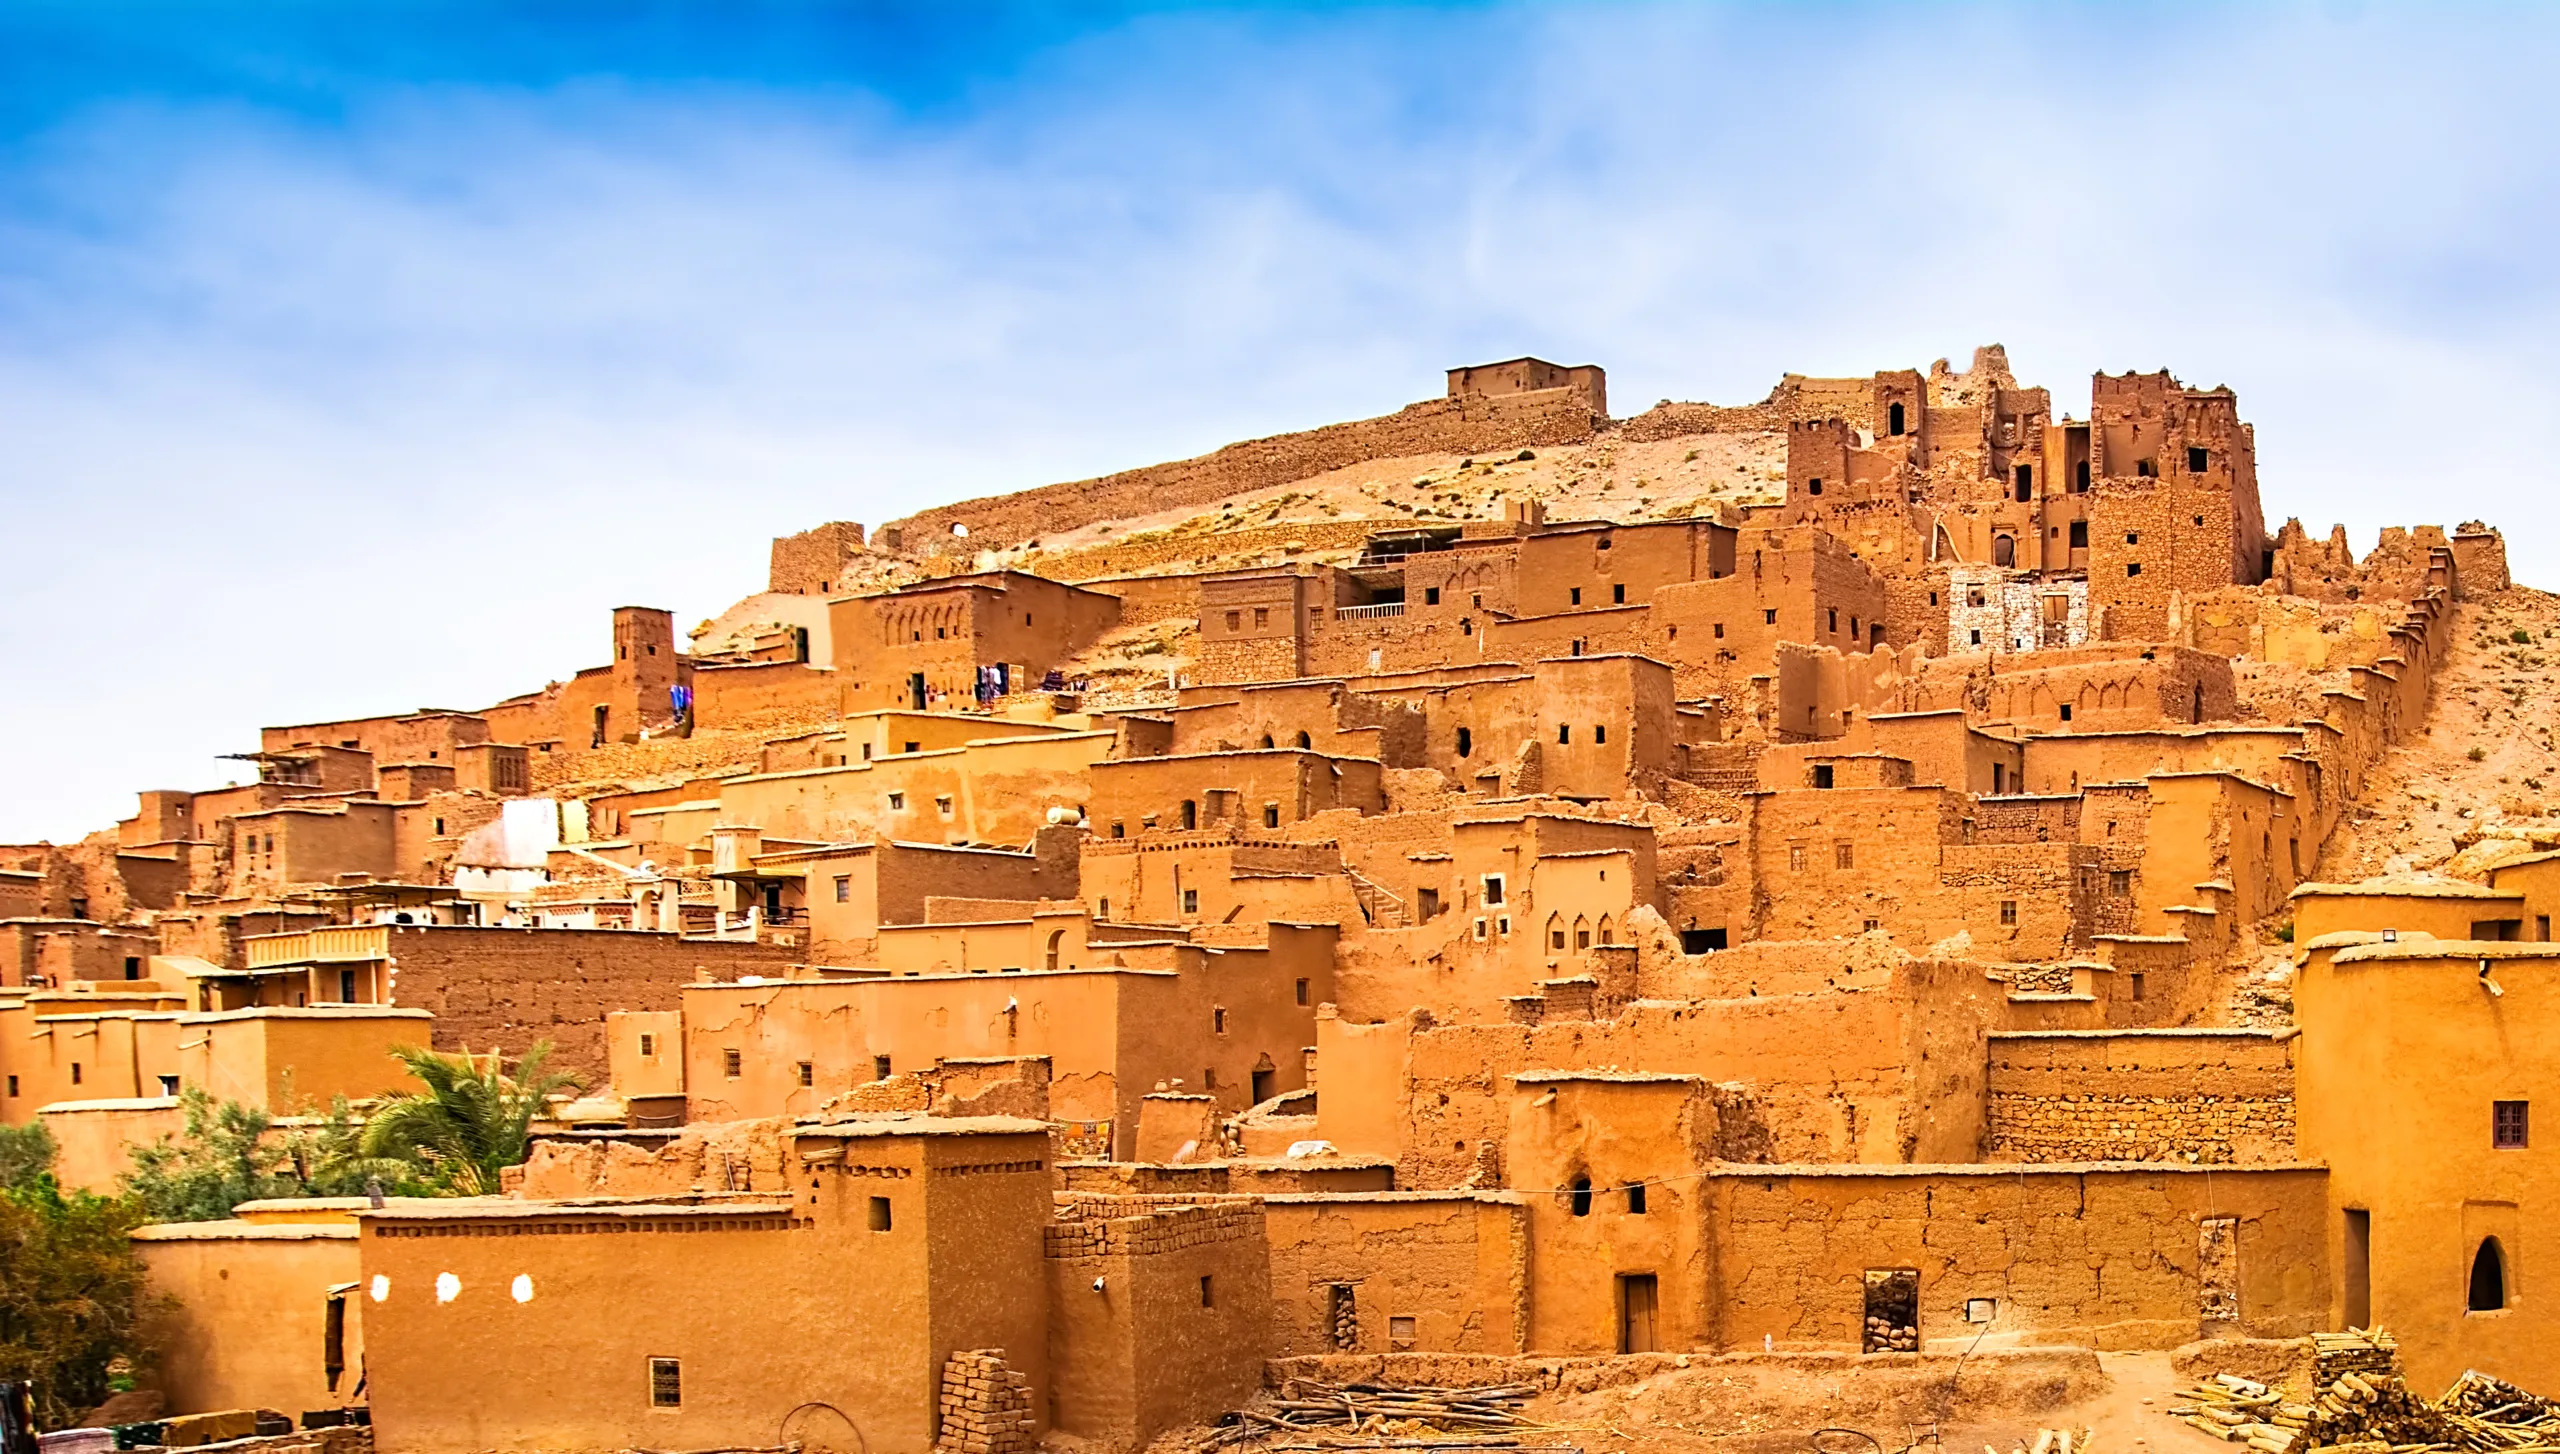 View of Ouarzazate